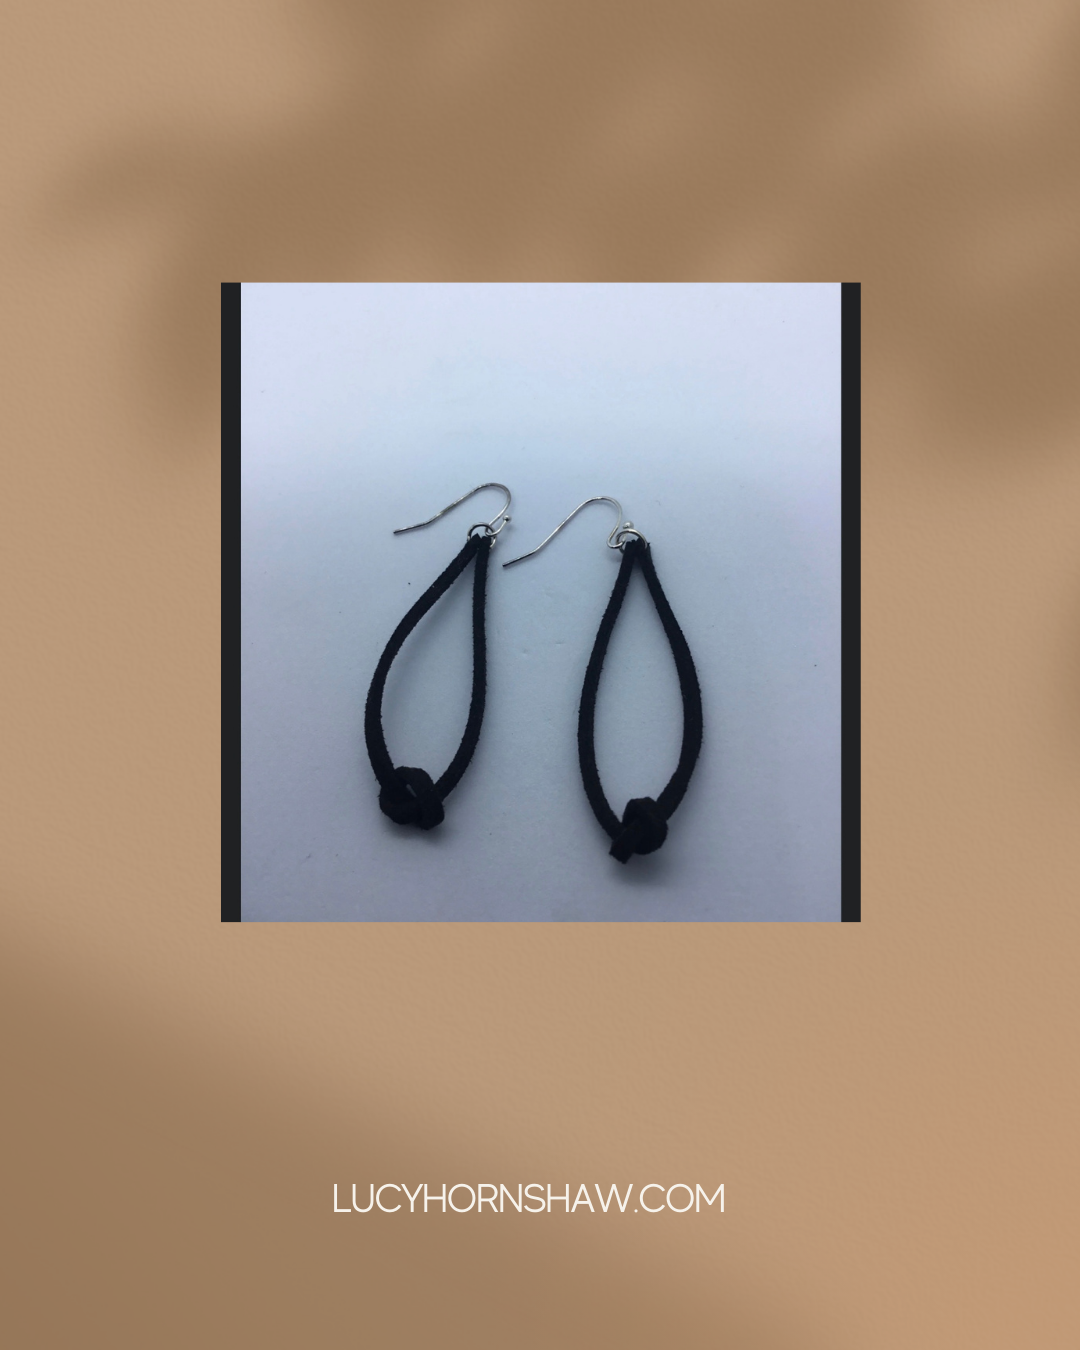 Black leather thong earrings